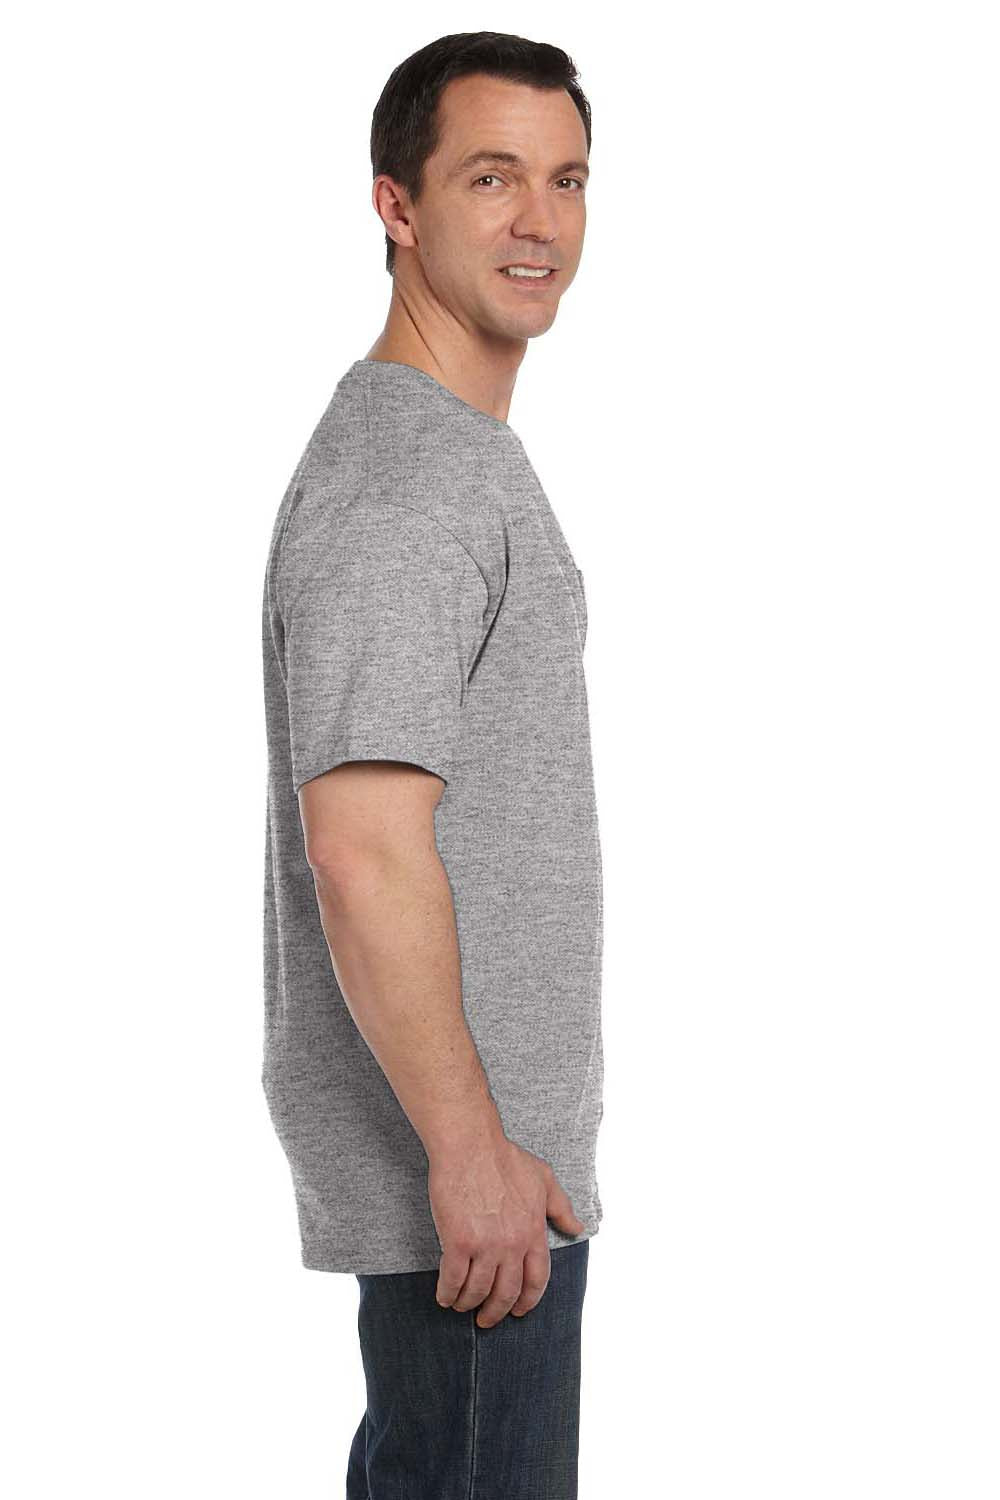 Hanes 5190P Mens Beefy-T Short Sleeve Crewneck T-Shirt w/ Pocket Light Steel Grey Side